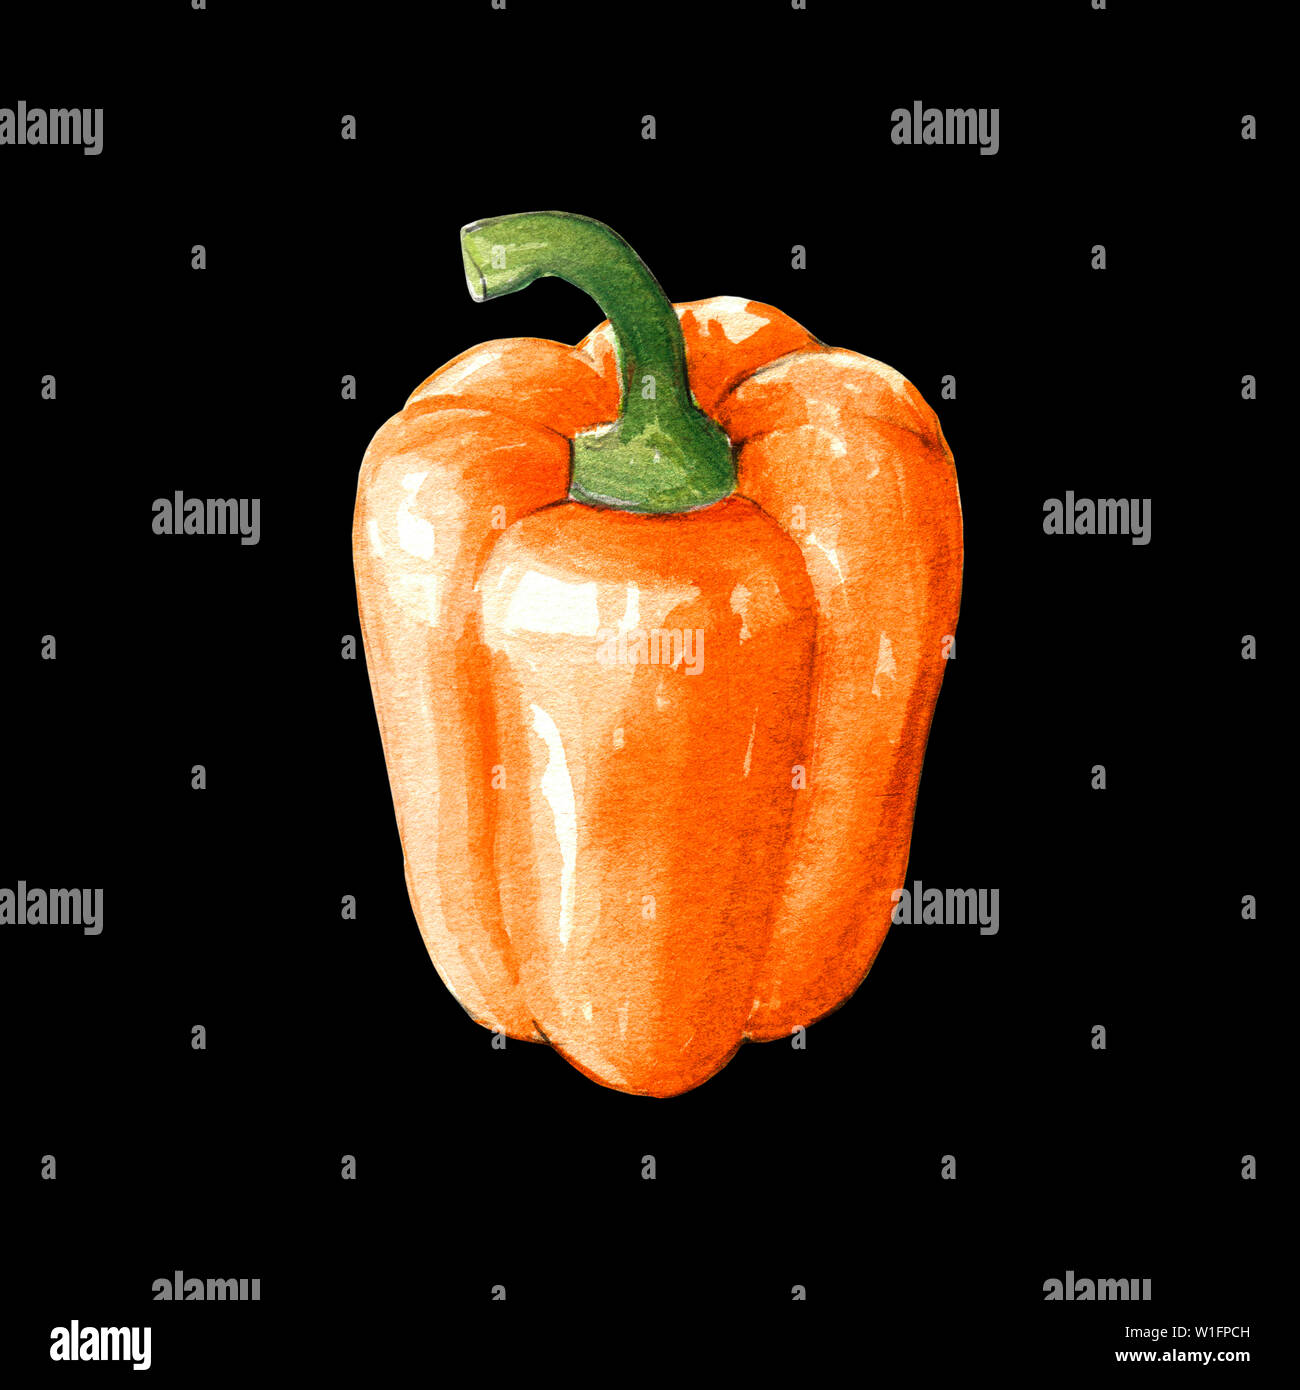 orange bell pepper watercolor illustration on black background Stock Photo